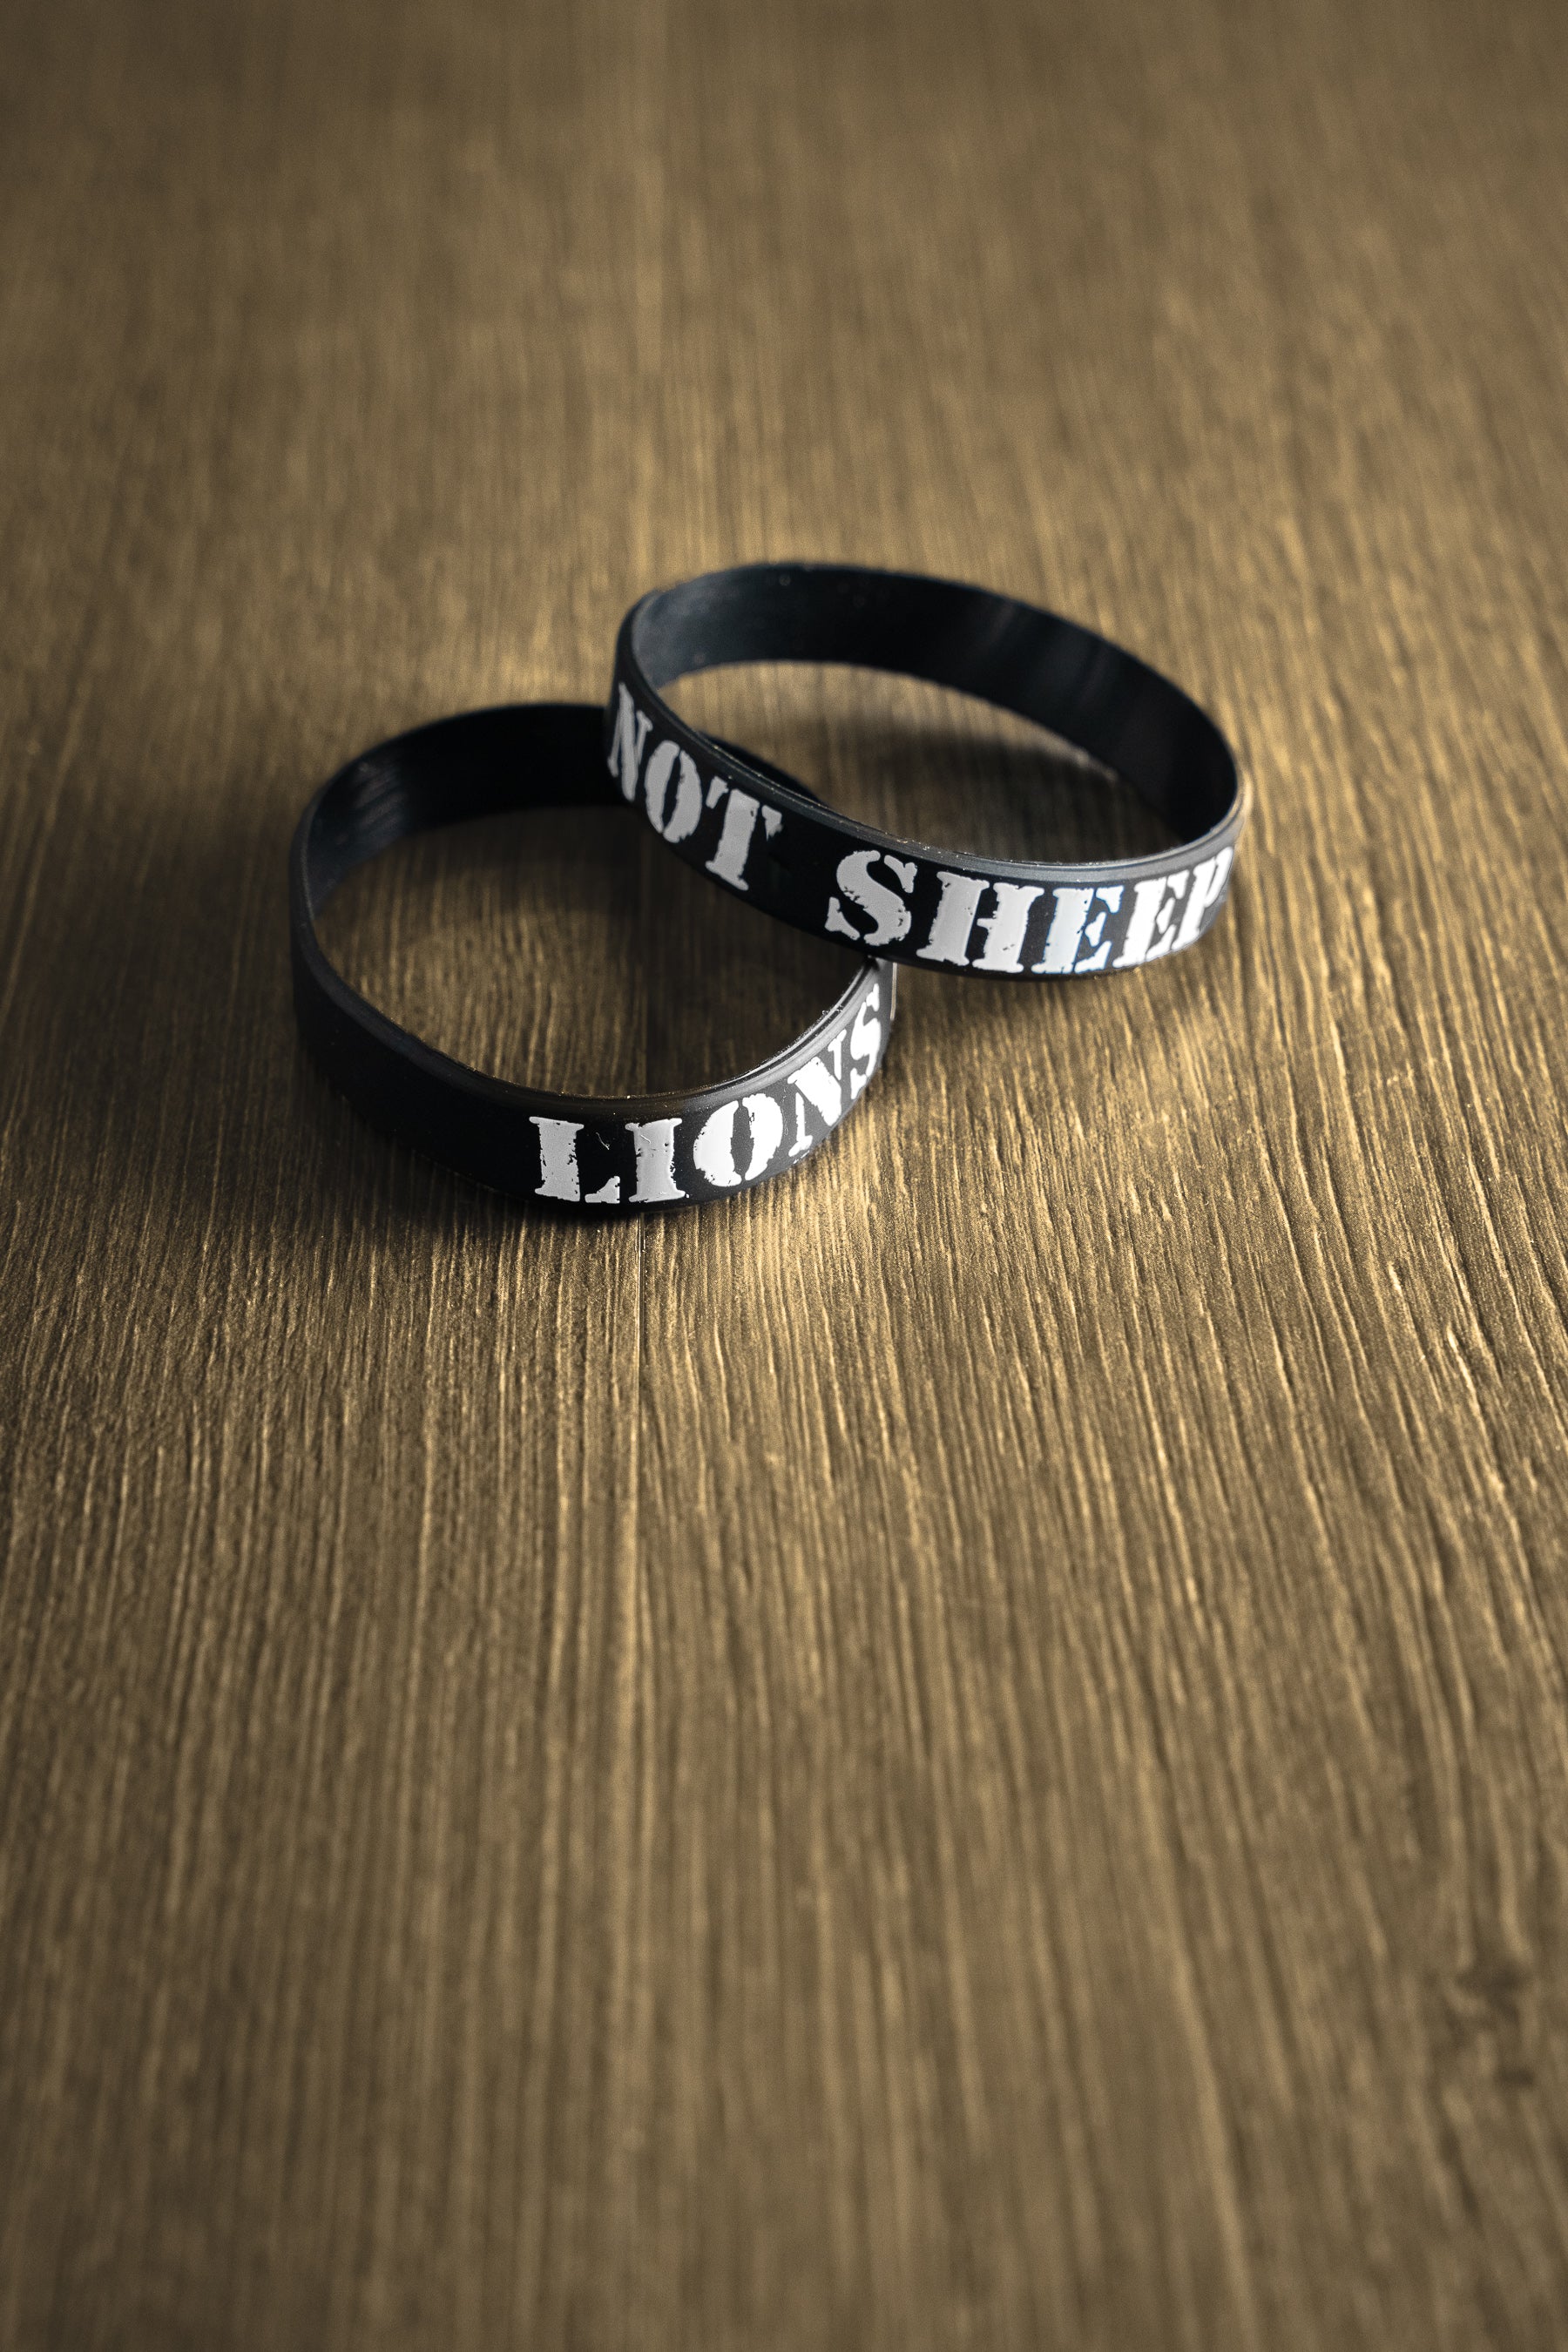 Lions Not Sheep "OG" Wristband - Lions Not Sheep ®